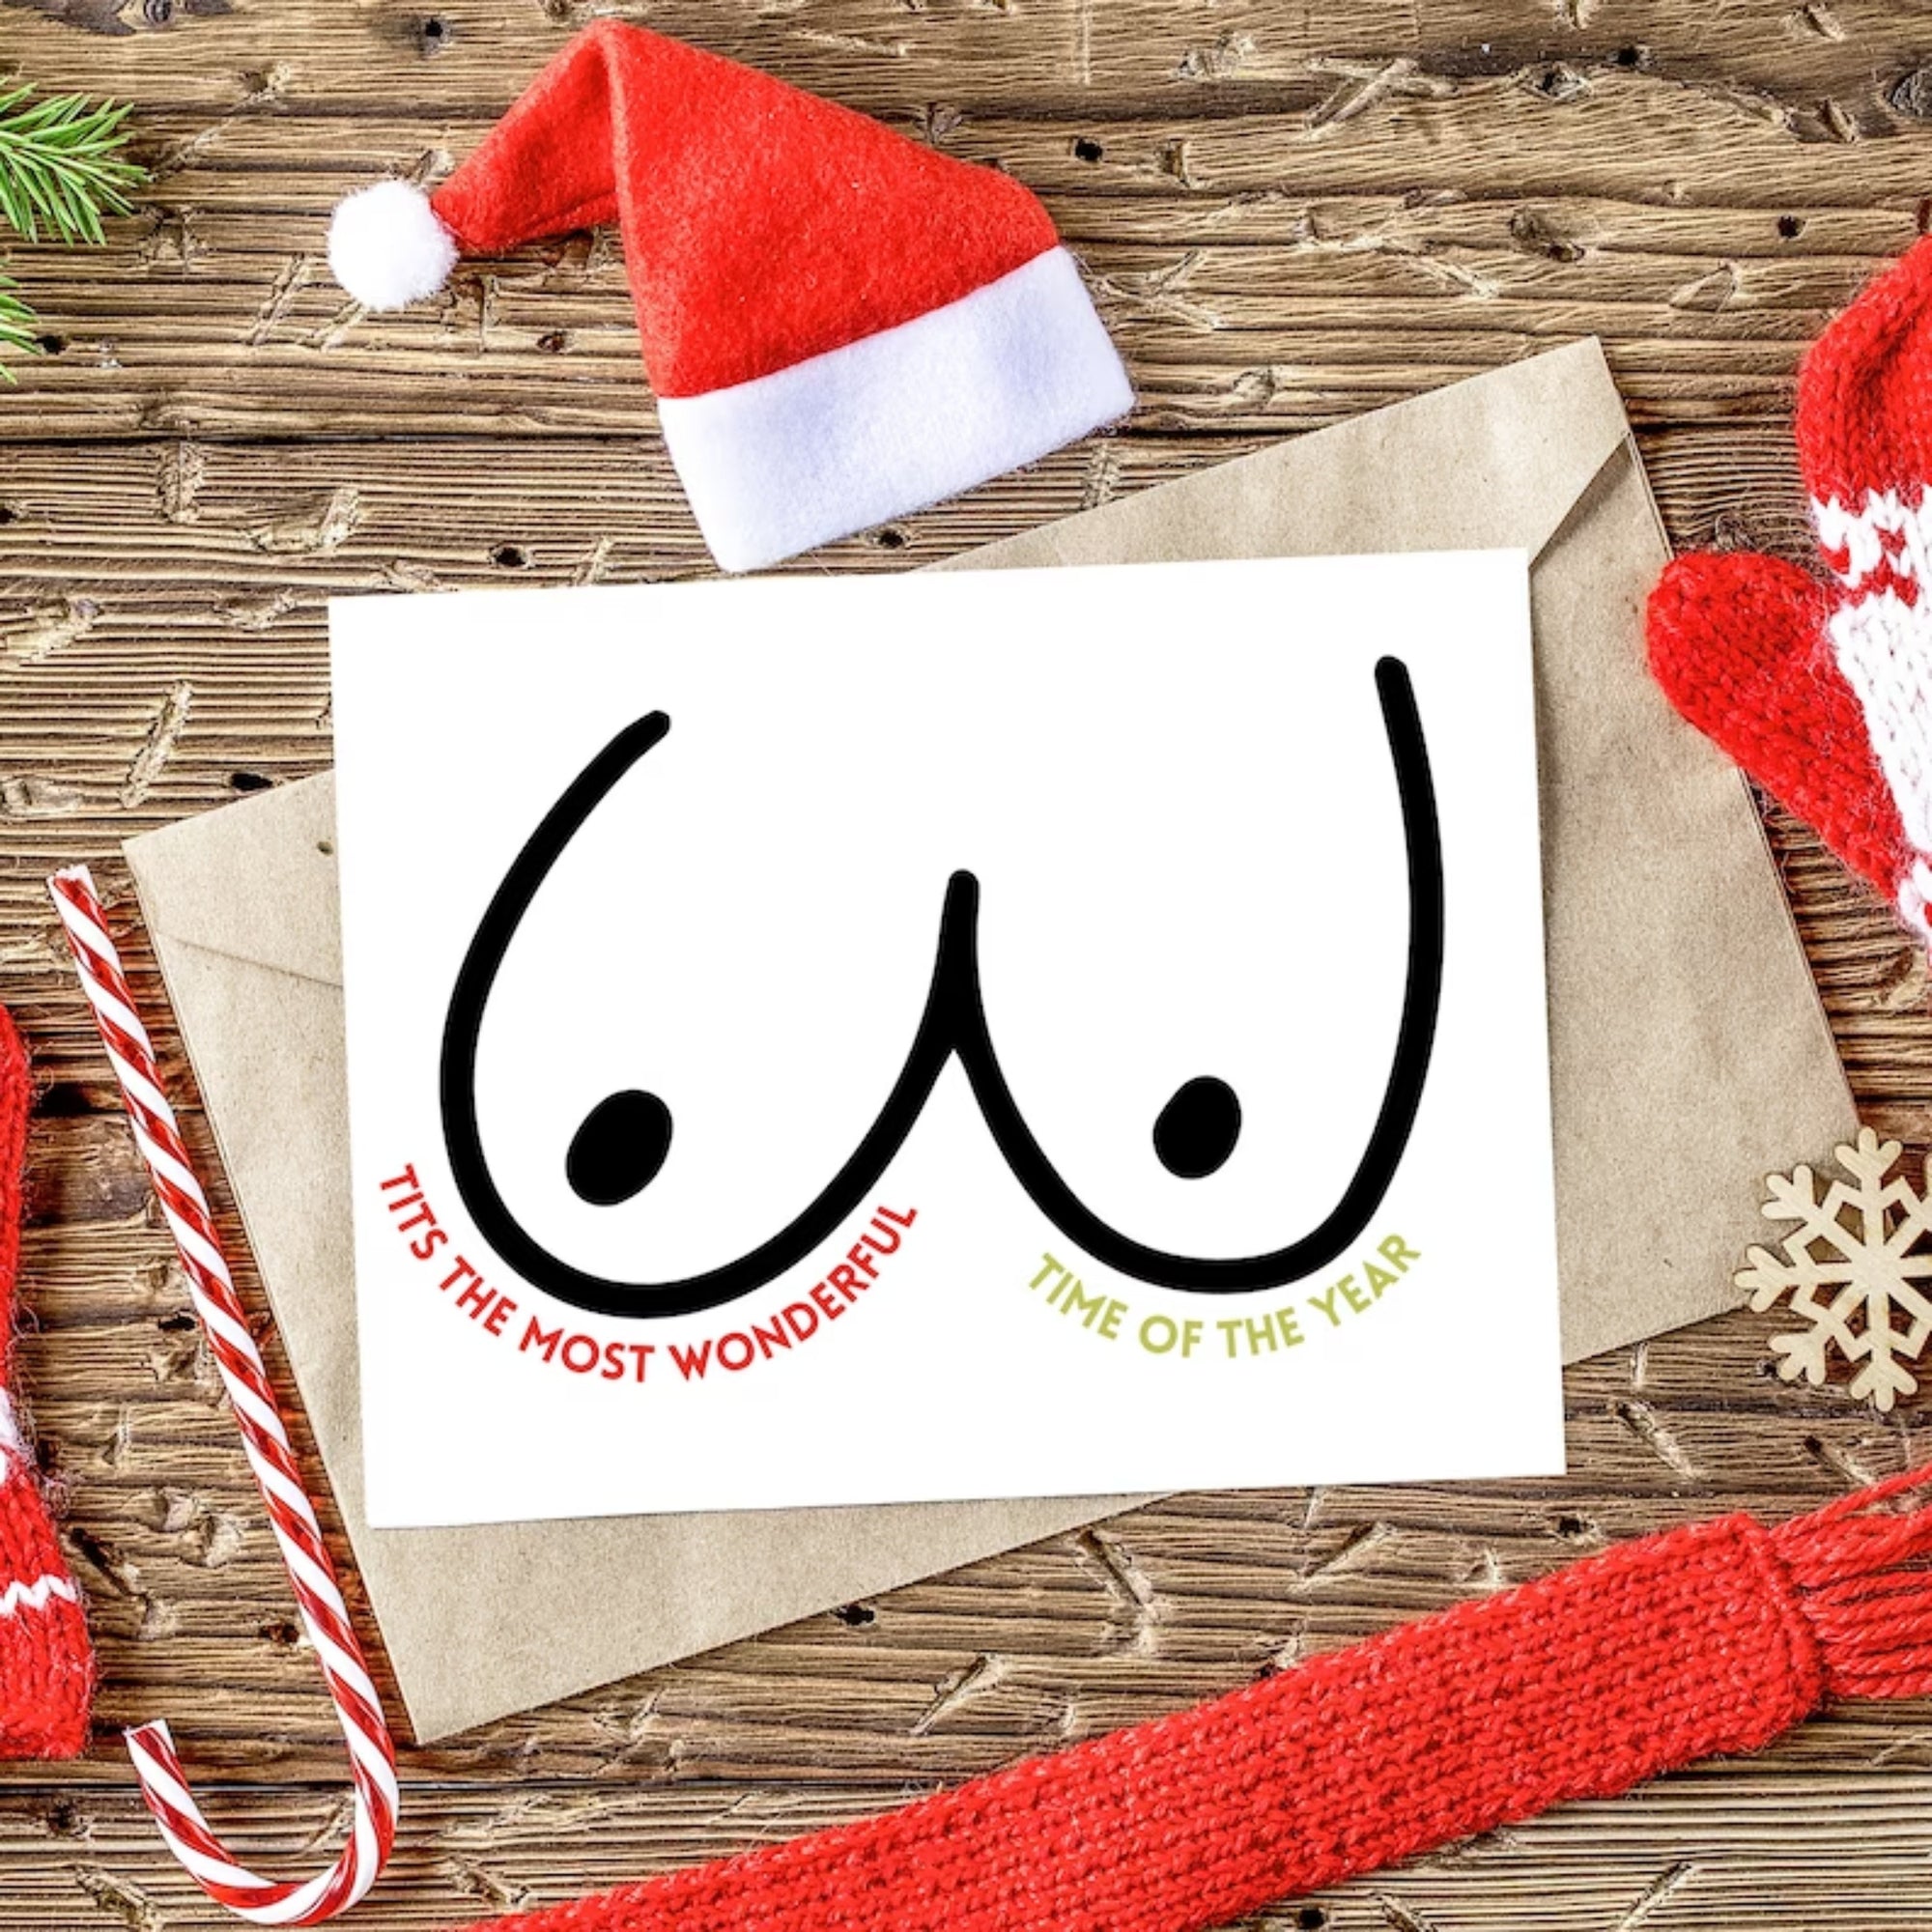 Snark-tastic December Greeting Card Bundle